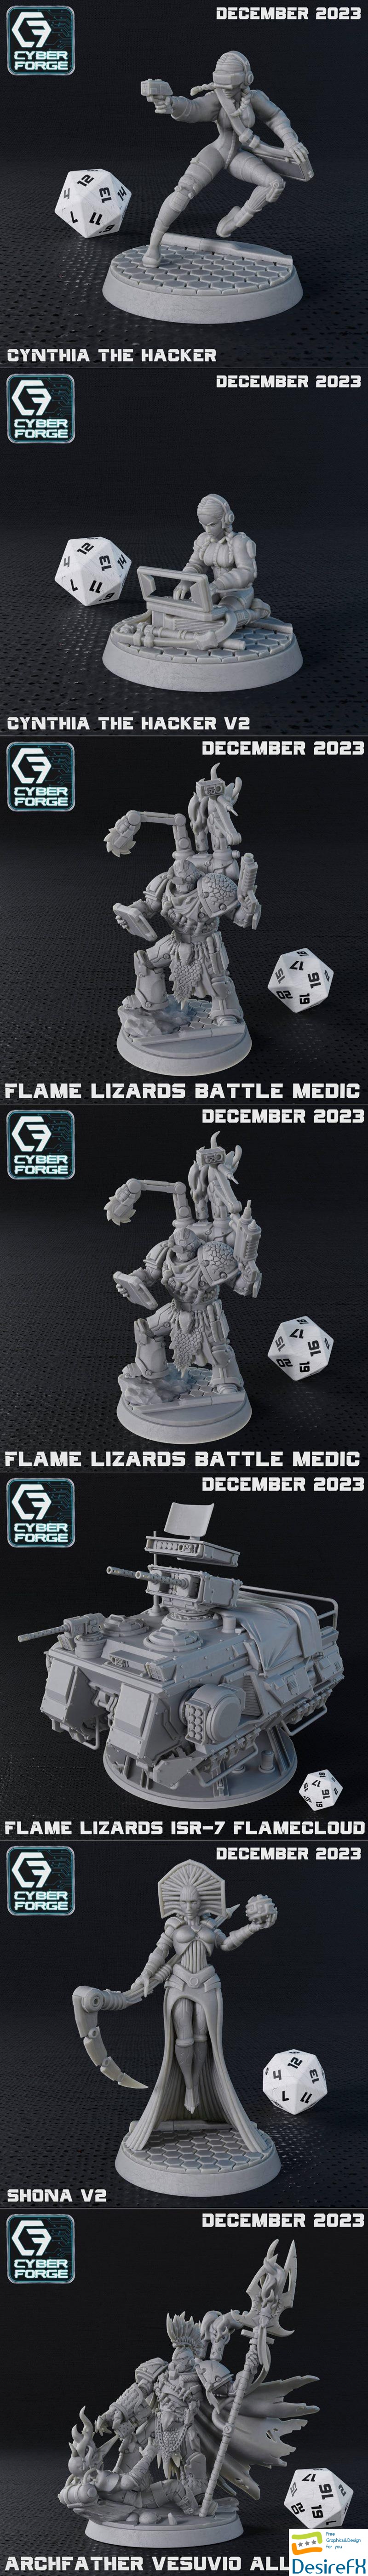 Cyber Forge - Titan Shock December 2023 3D Print